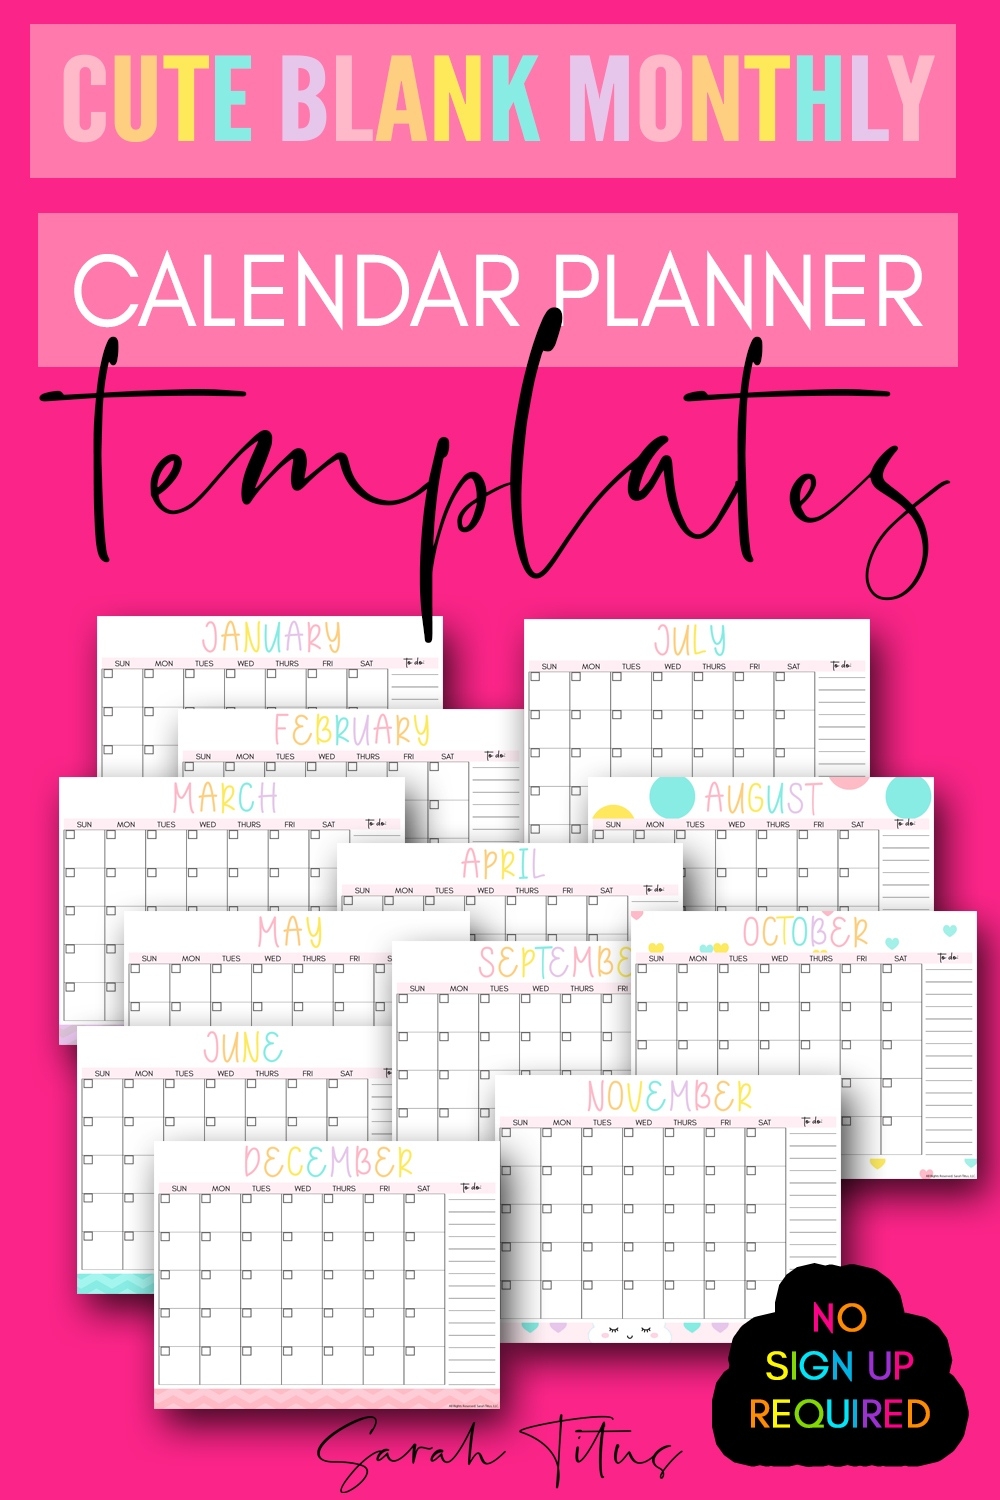 Cute Blank Monthly Calendar Planner Templates - Sarah Titus Free Printable Calendar Template